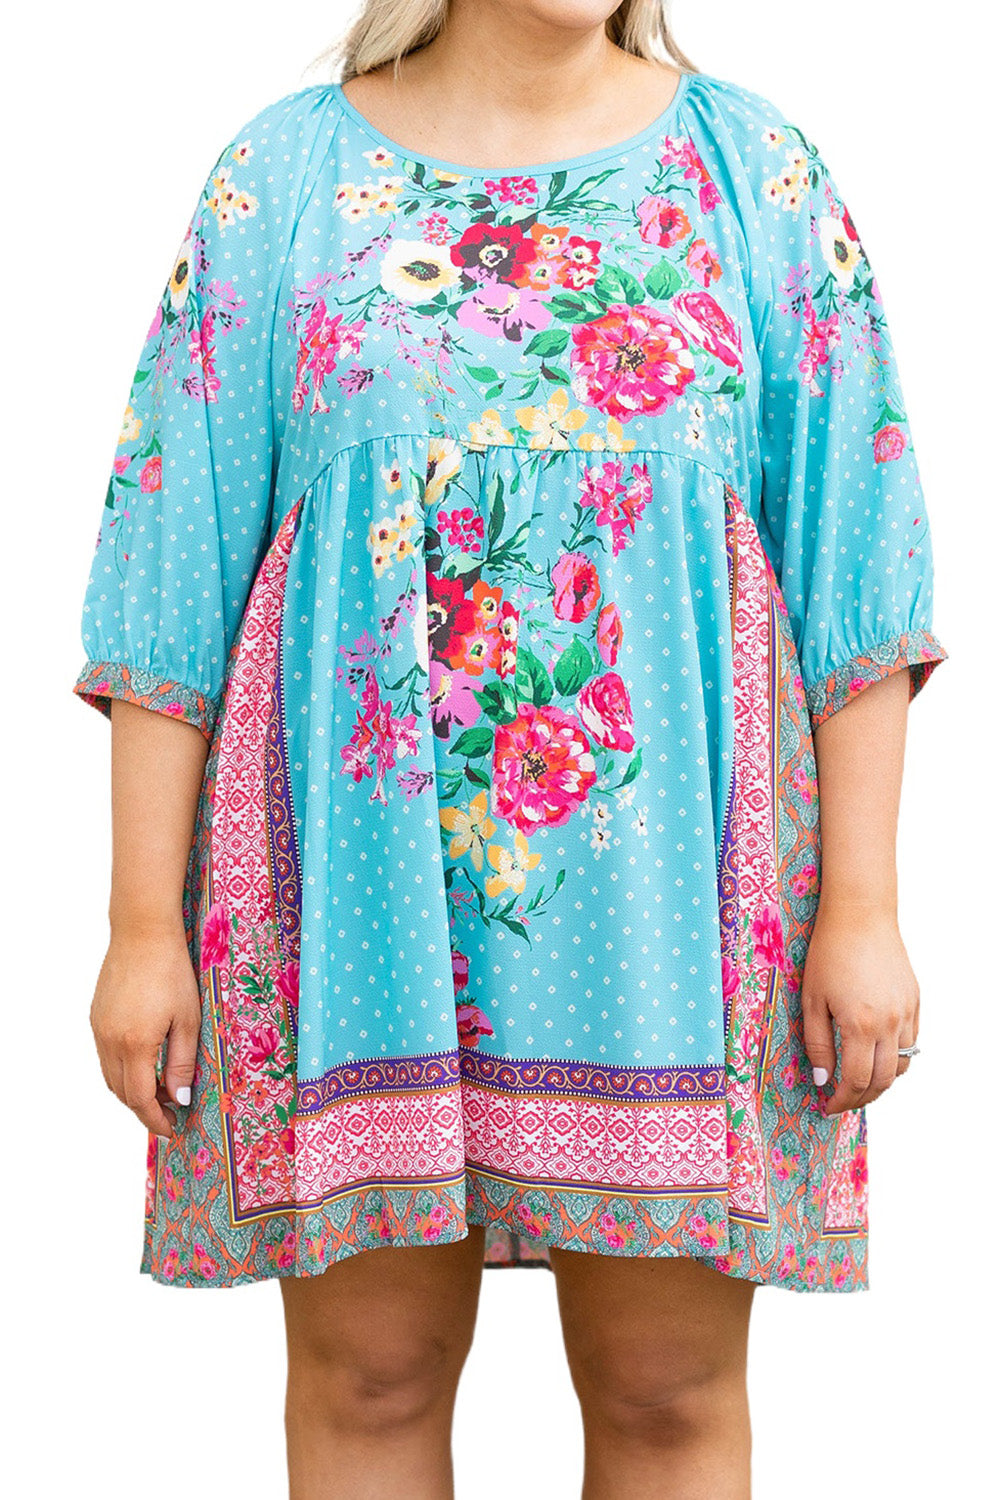 Sky Blue Mix Boho Floral Print Plus Size Mini Babydoll Dress Plus Size Dresses JT's Designer Fashion